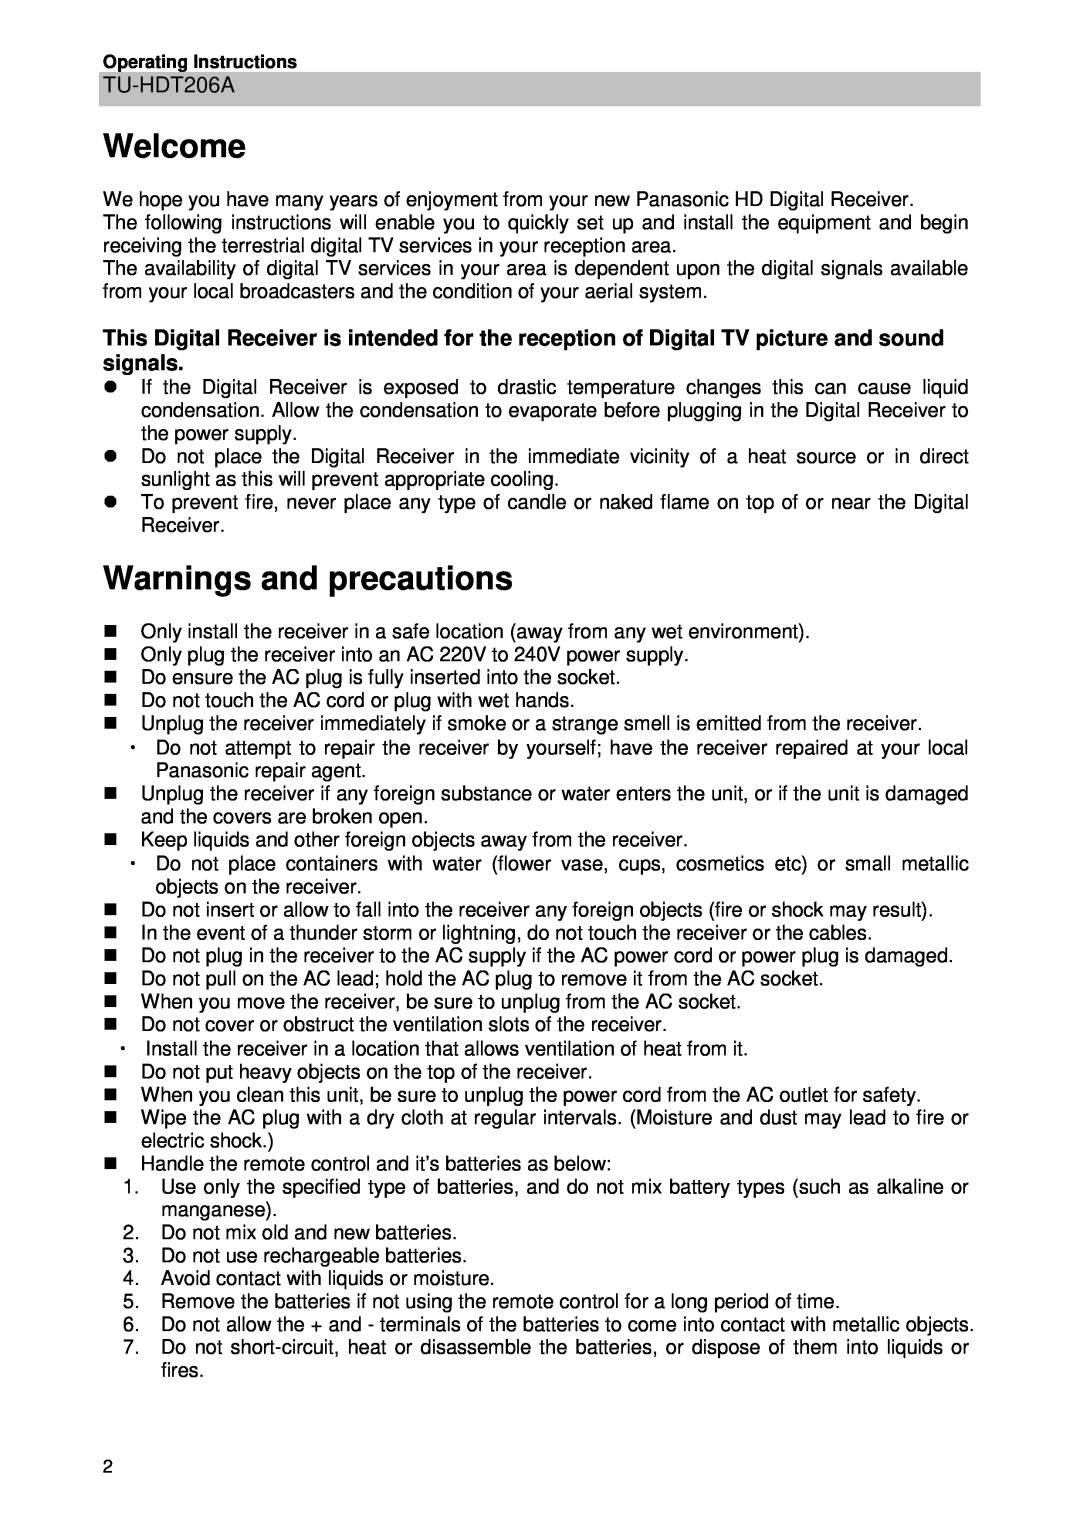 Panasonic TU-HDT206A manual Welcome, Warnings and precautions 